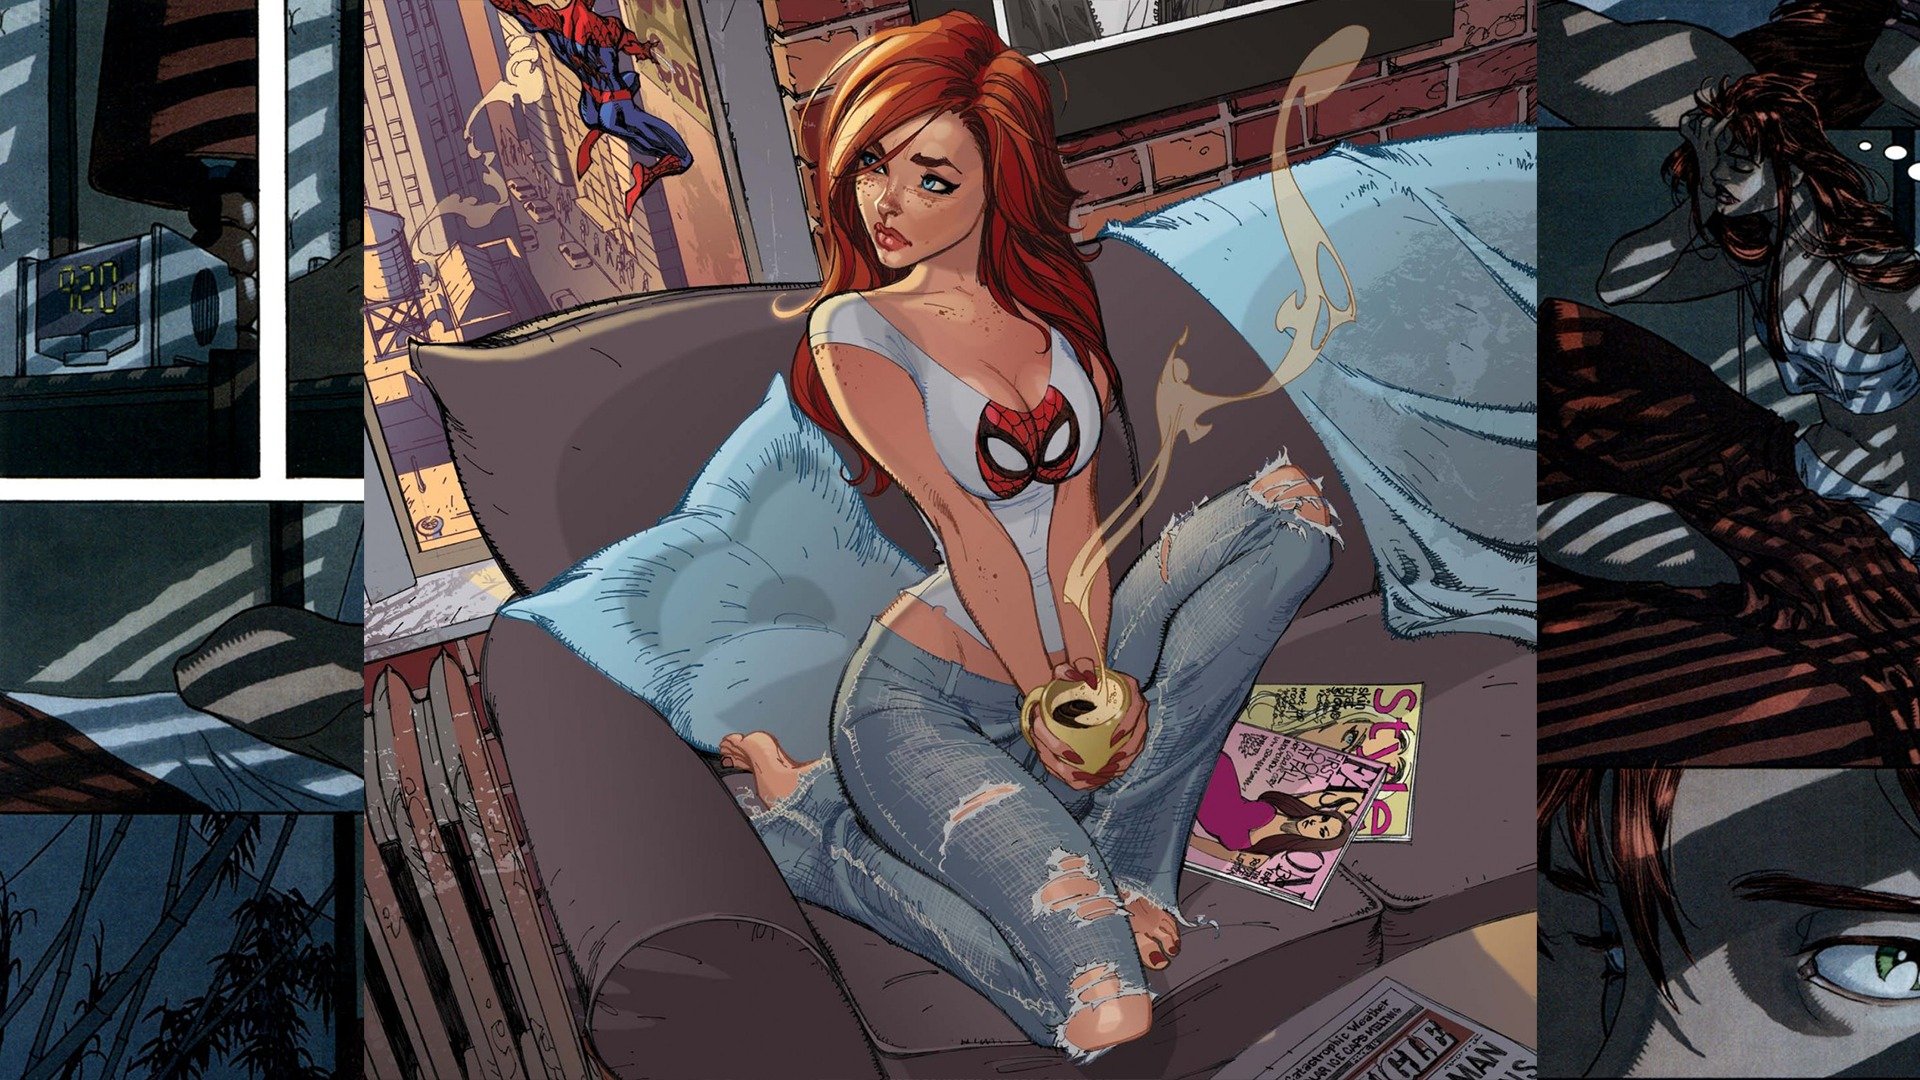 мэри джейн уотсон комикс человек паук арт девушка рыжая веснушки чашка кофе журналы джинсы диван комната окно